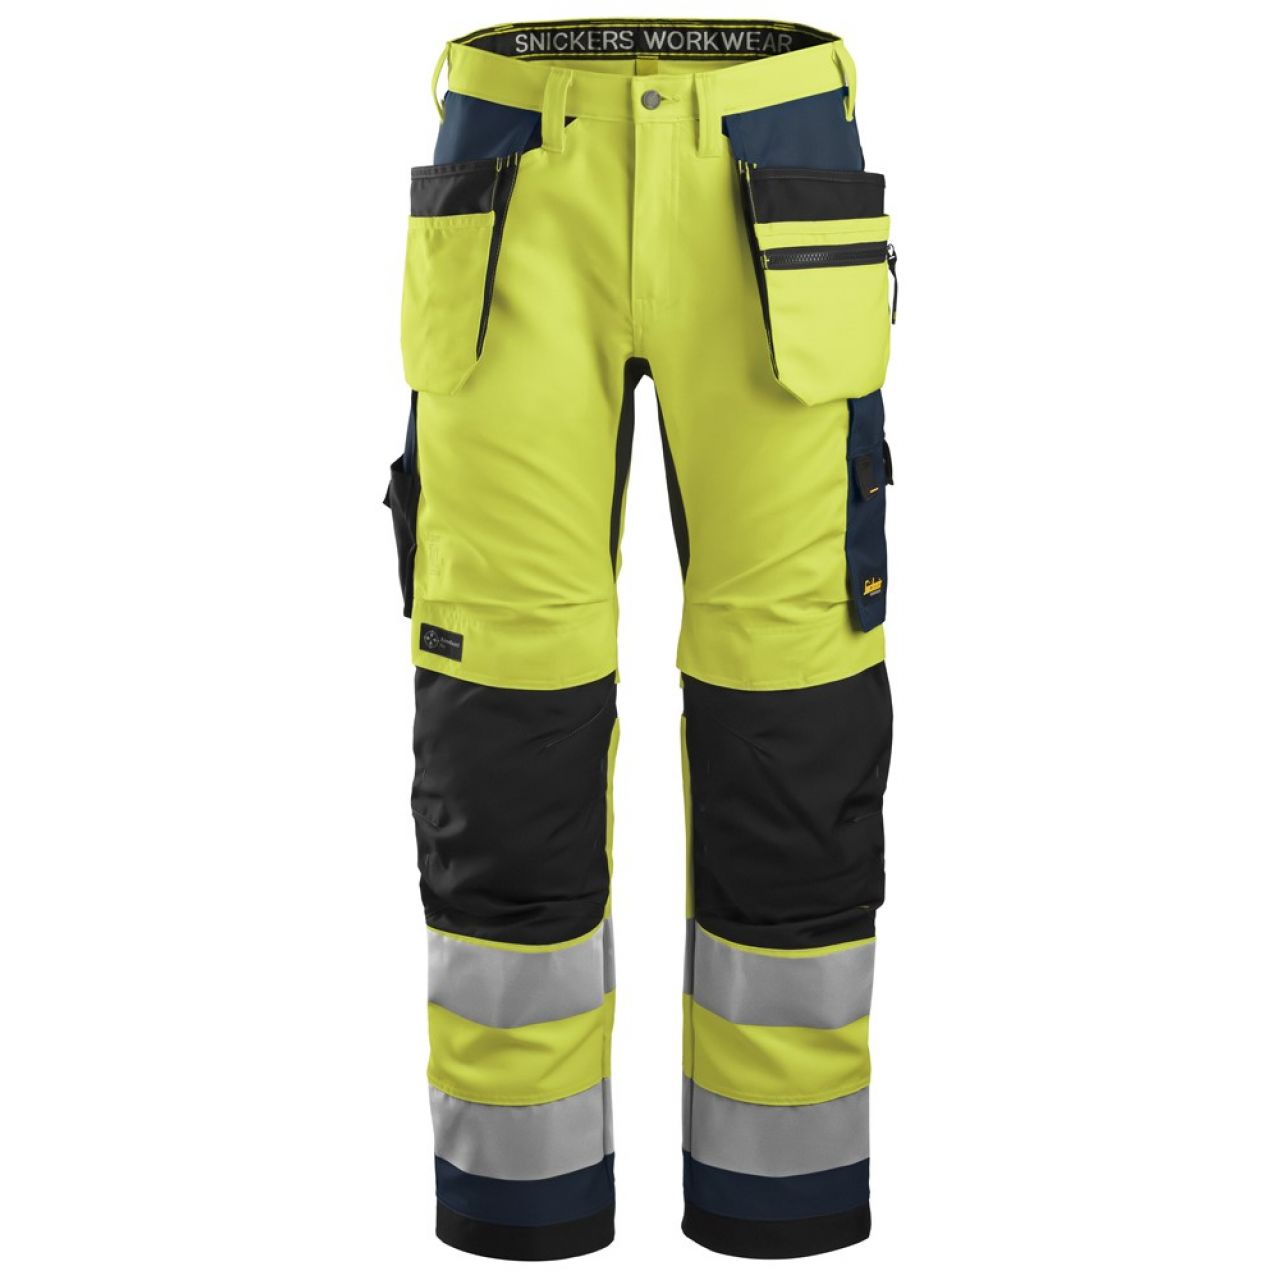 6230 Pantalones largos de trabajo de alta visibilidad clase 2 con bolsillos flotantes AllroundWork amarillo-azul marino talla 62